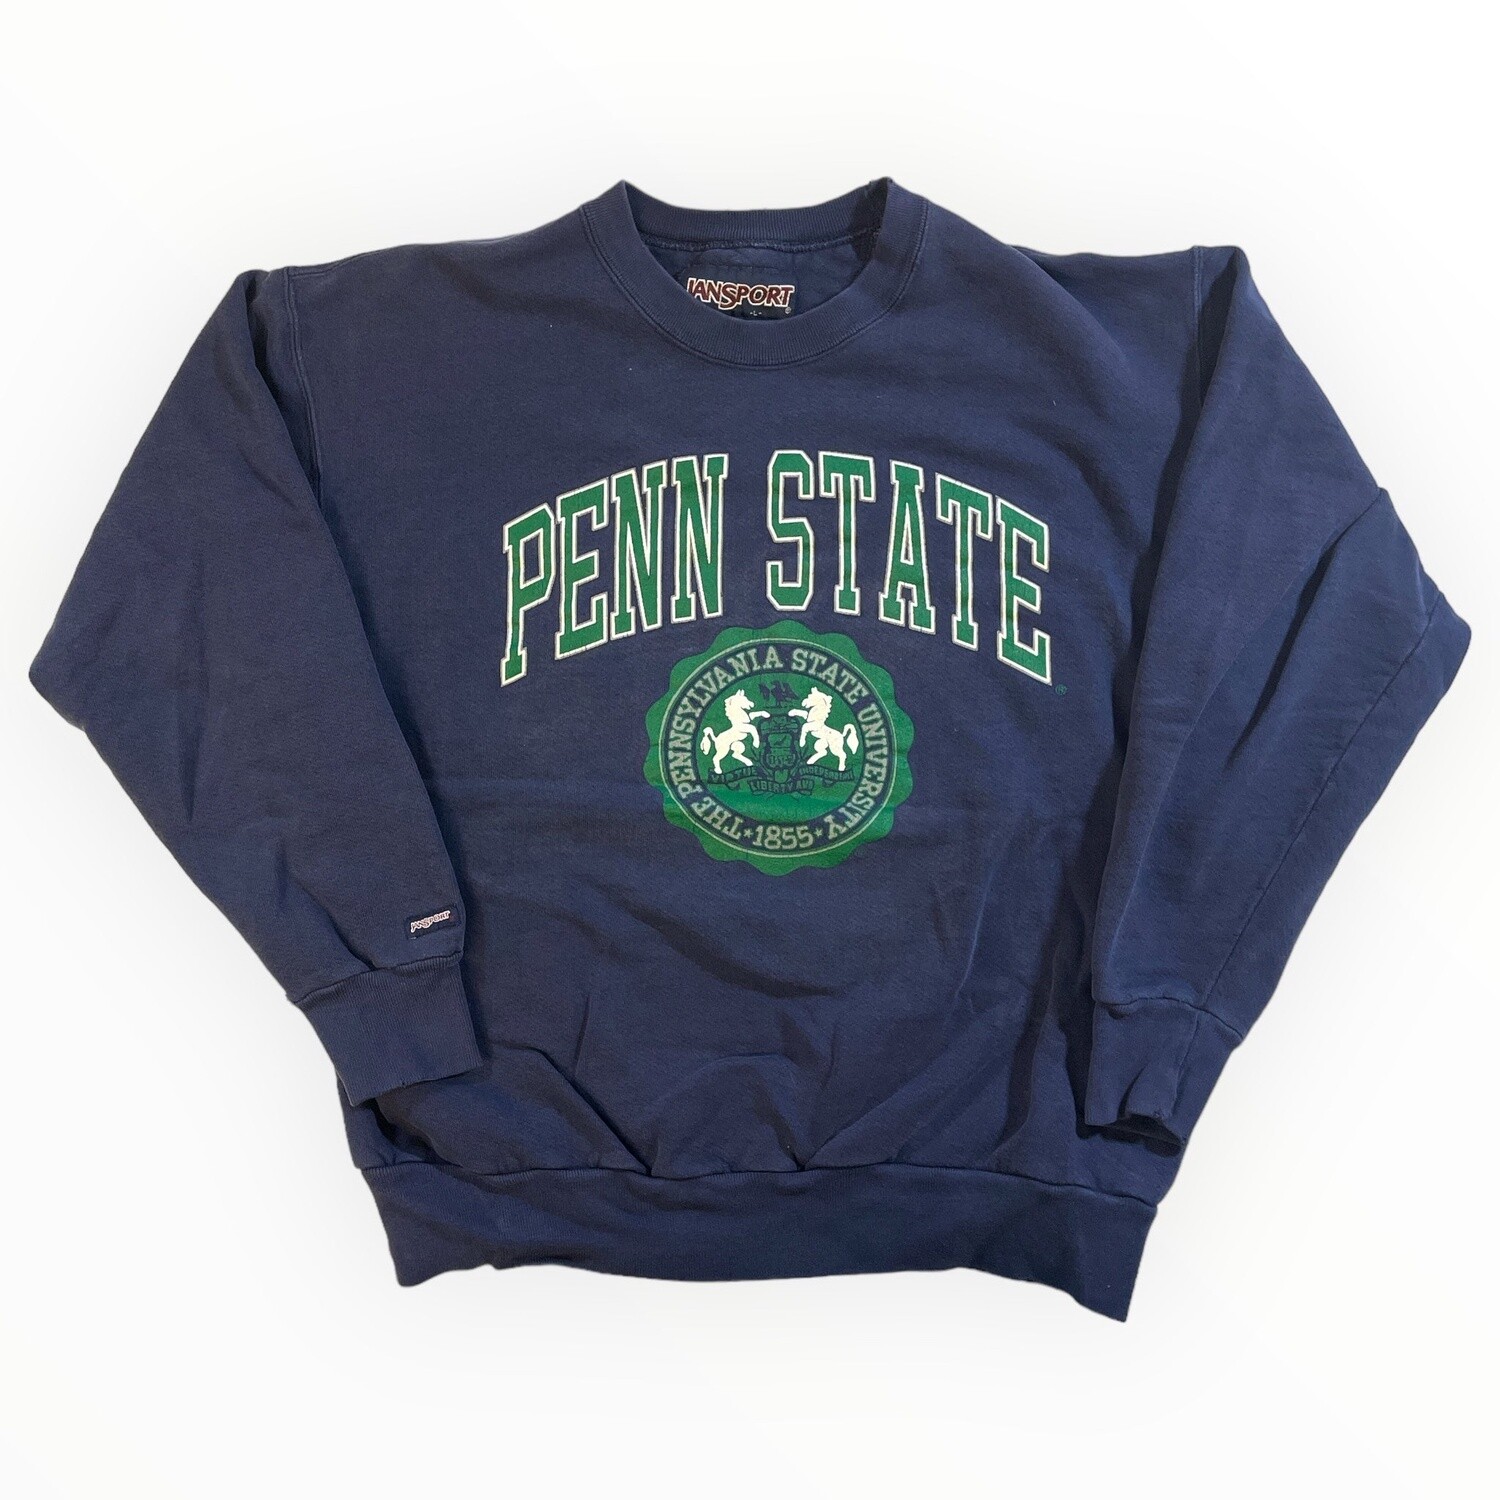 Vintage Penn State Crewneck, Size: Large, Color: Blue, Style: College